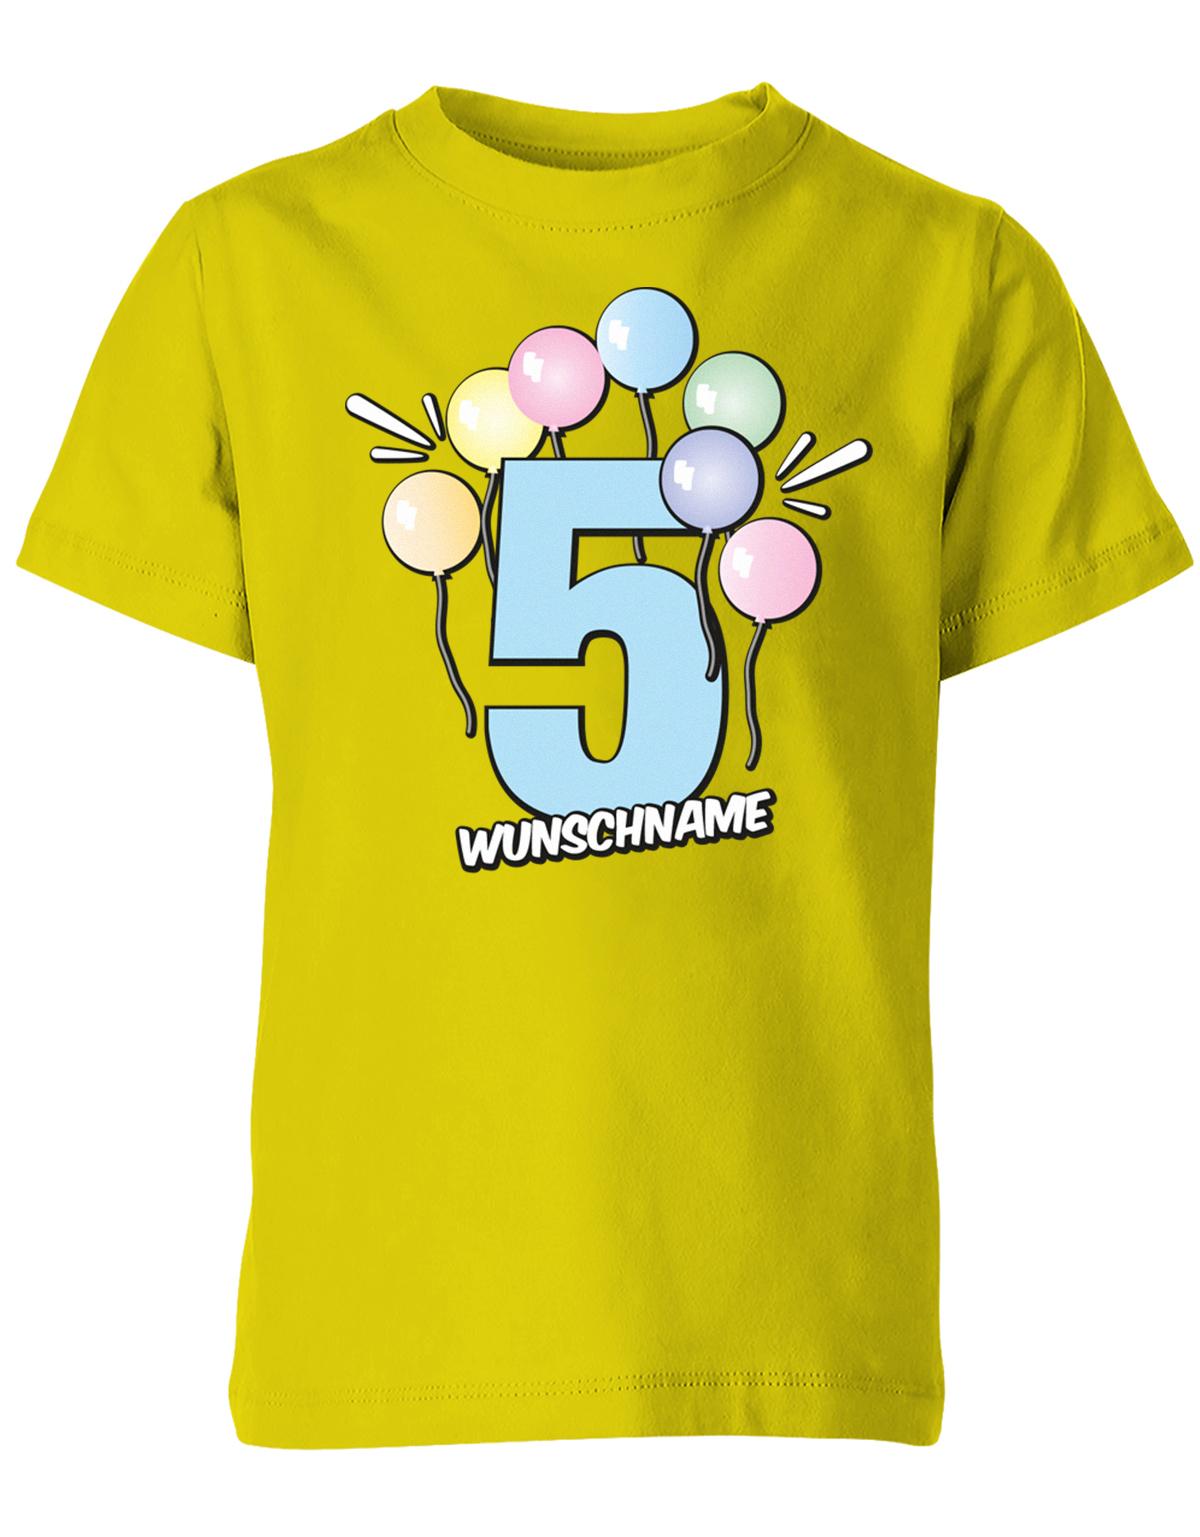 Luftballons-pastell-5-geburtstag-wunschname-kinder-shirt-gelb